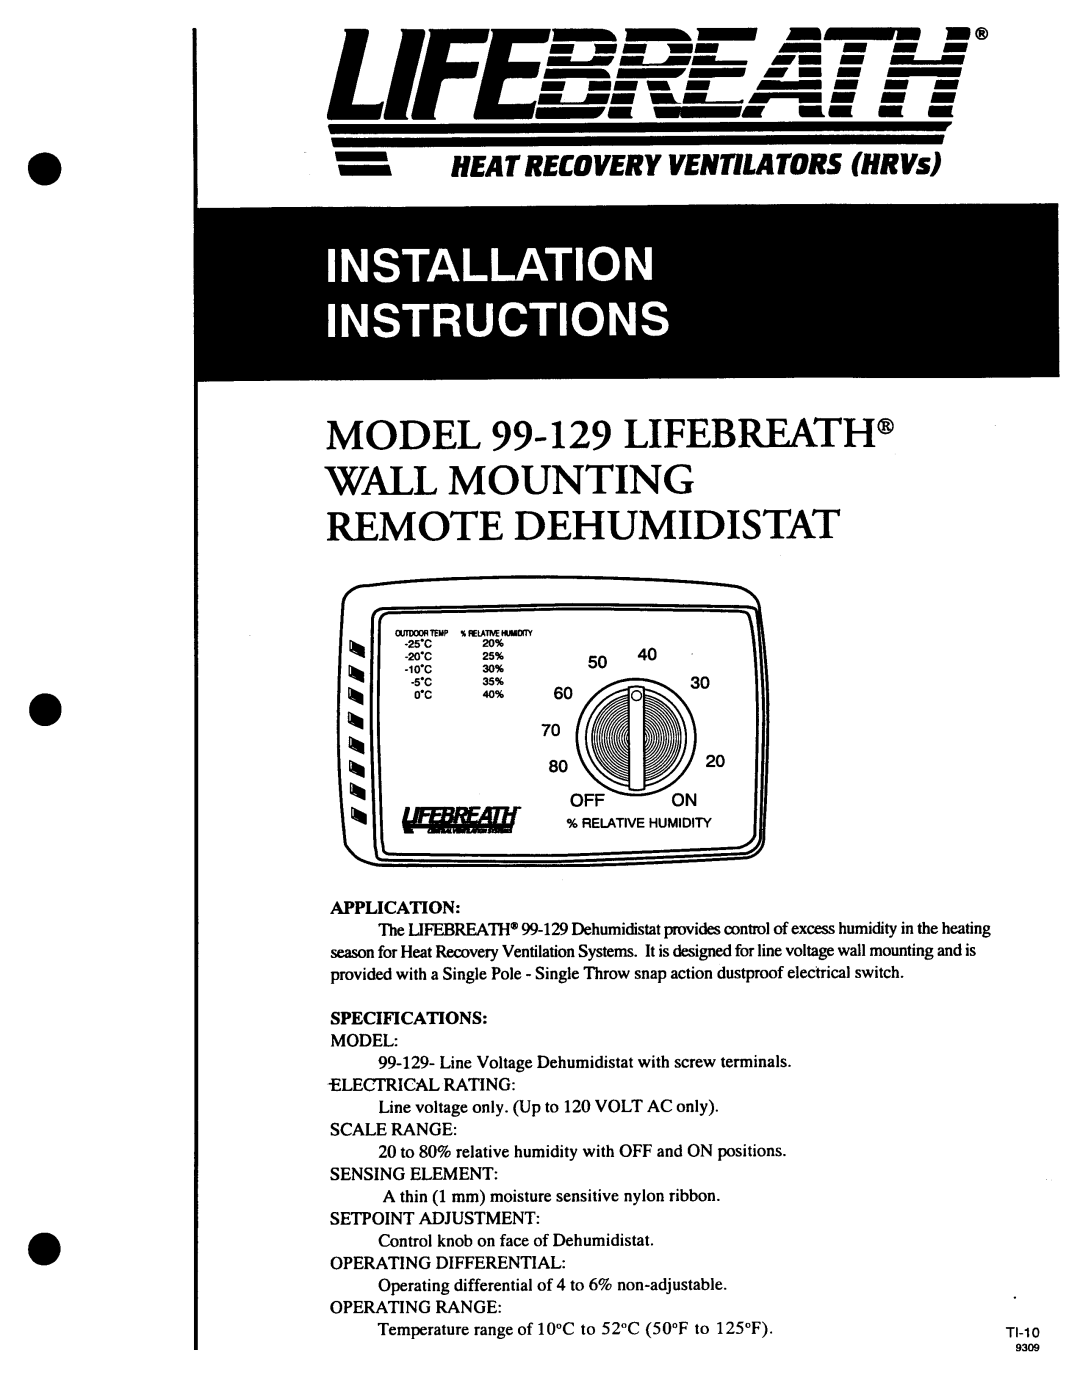 Lifebreath 99-129 manual 